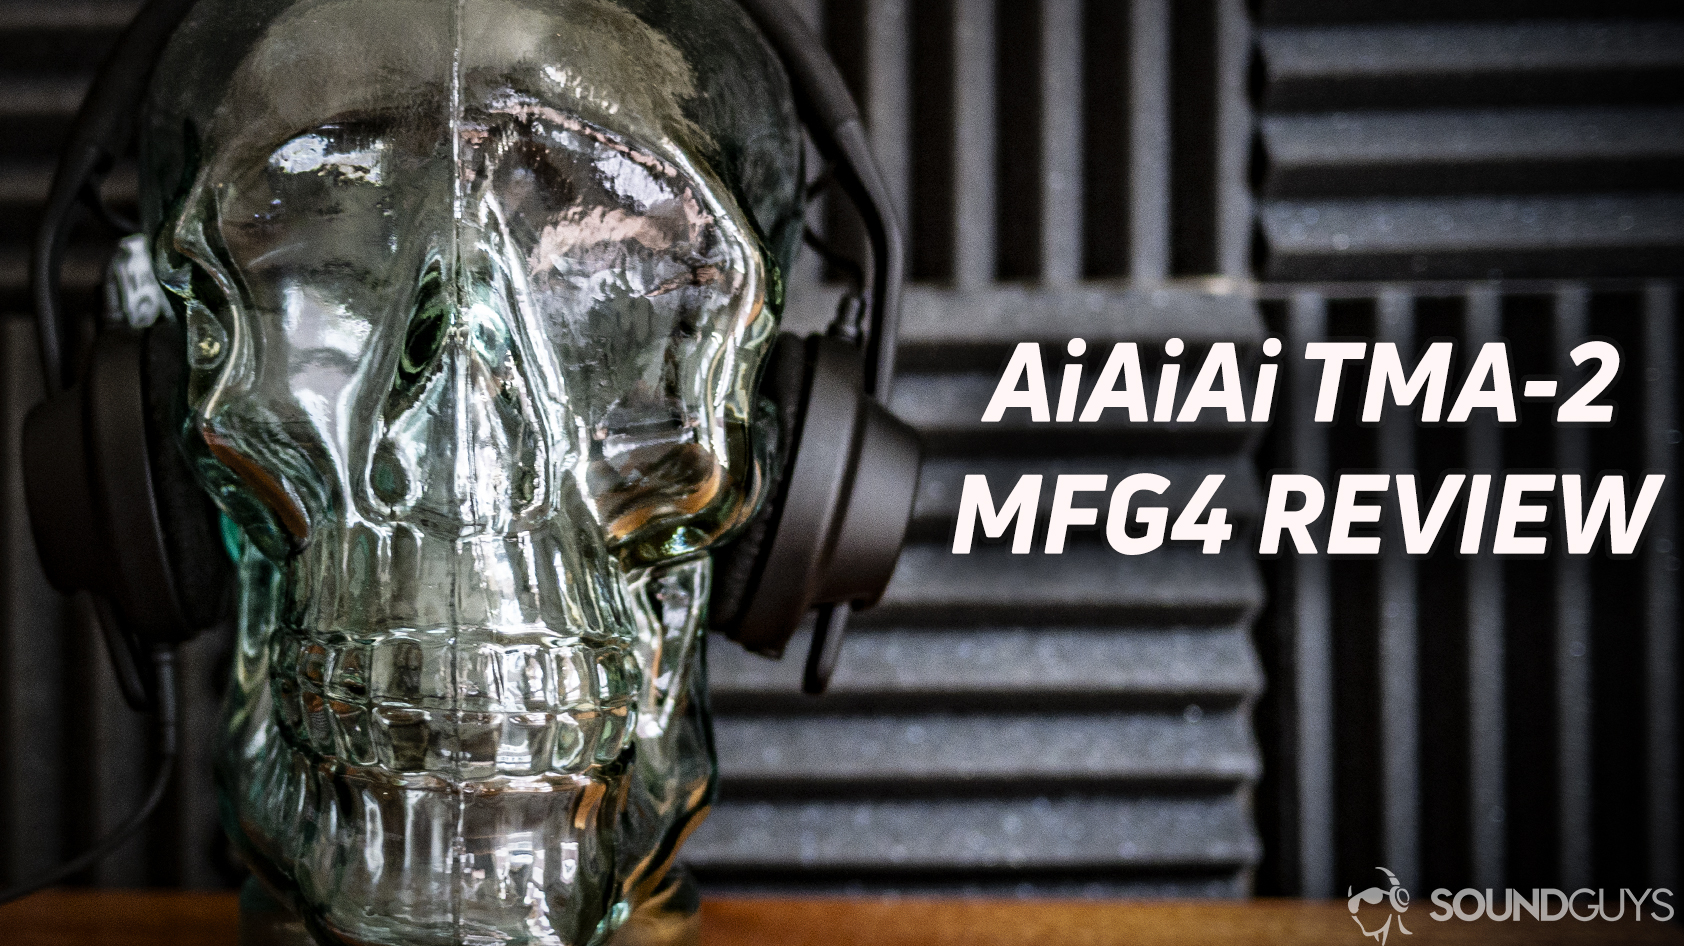 A photo of the AiAiAi TMA-2 MFG4 headphones on a glass skull.